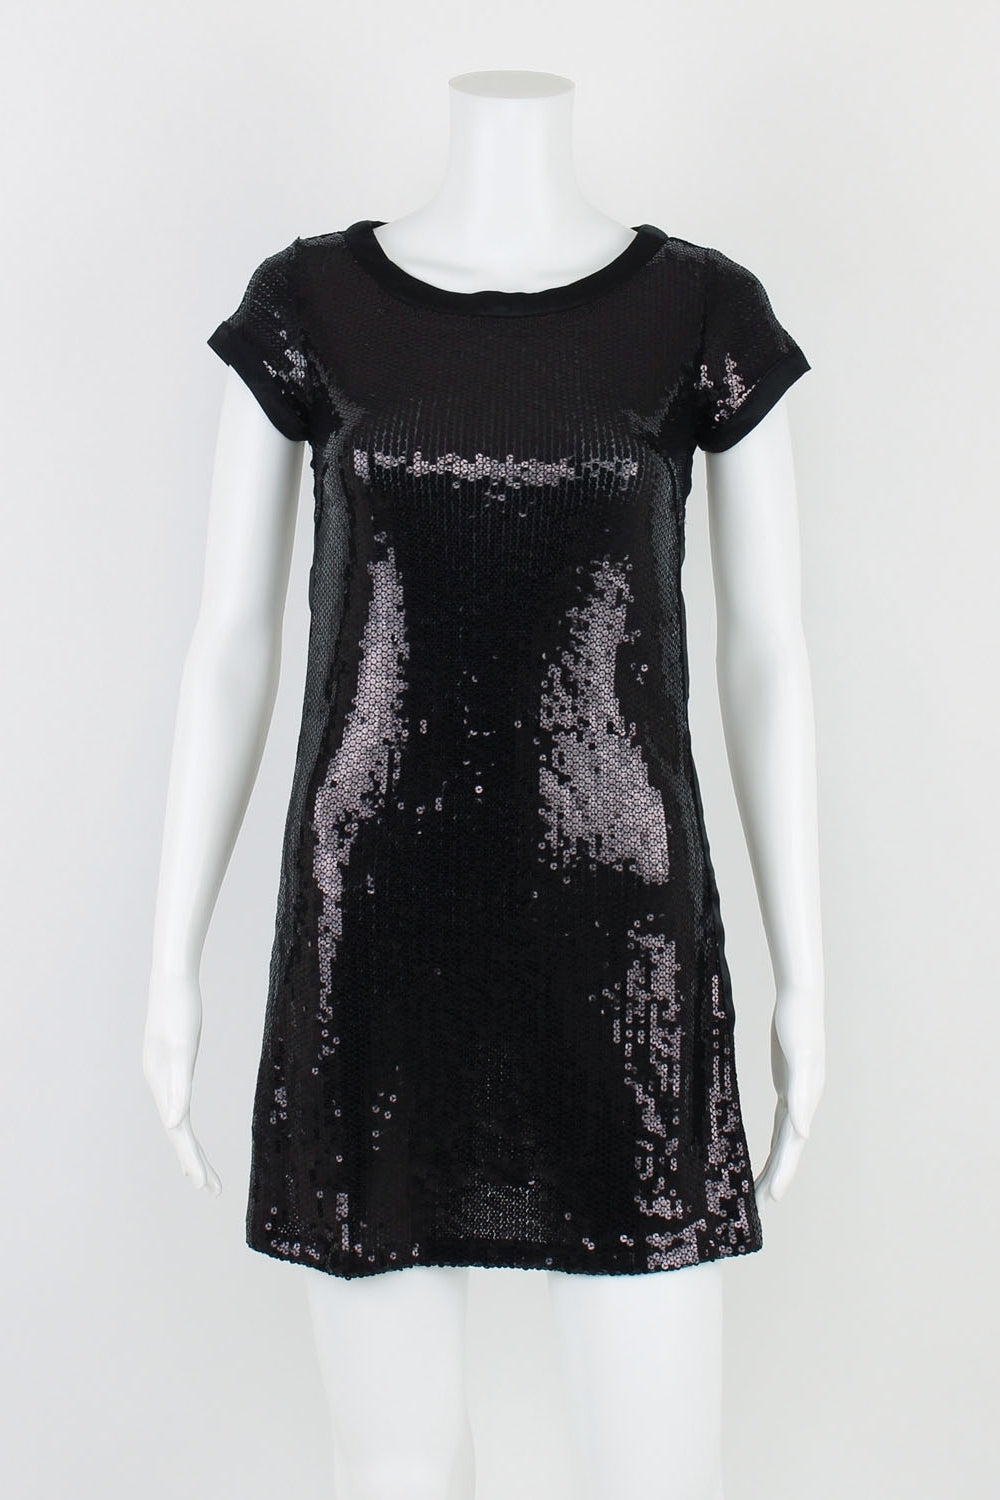 Cherrie Black Sequin Dress S